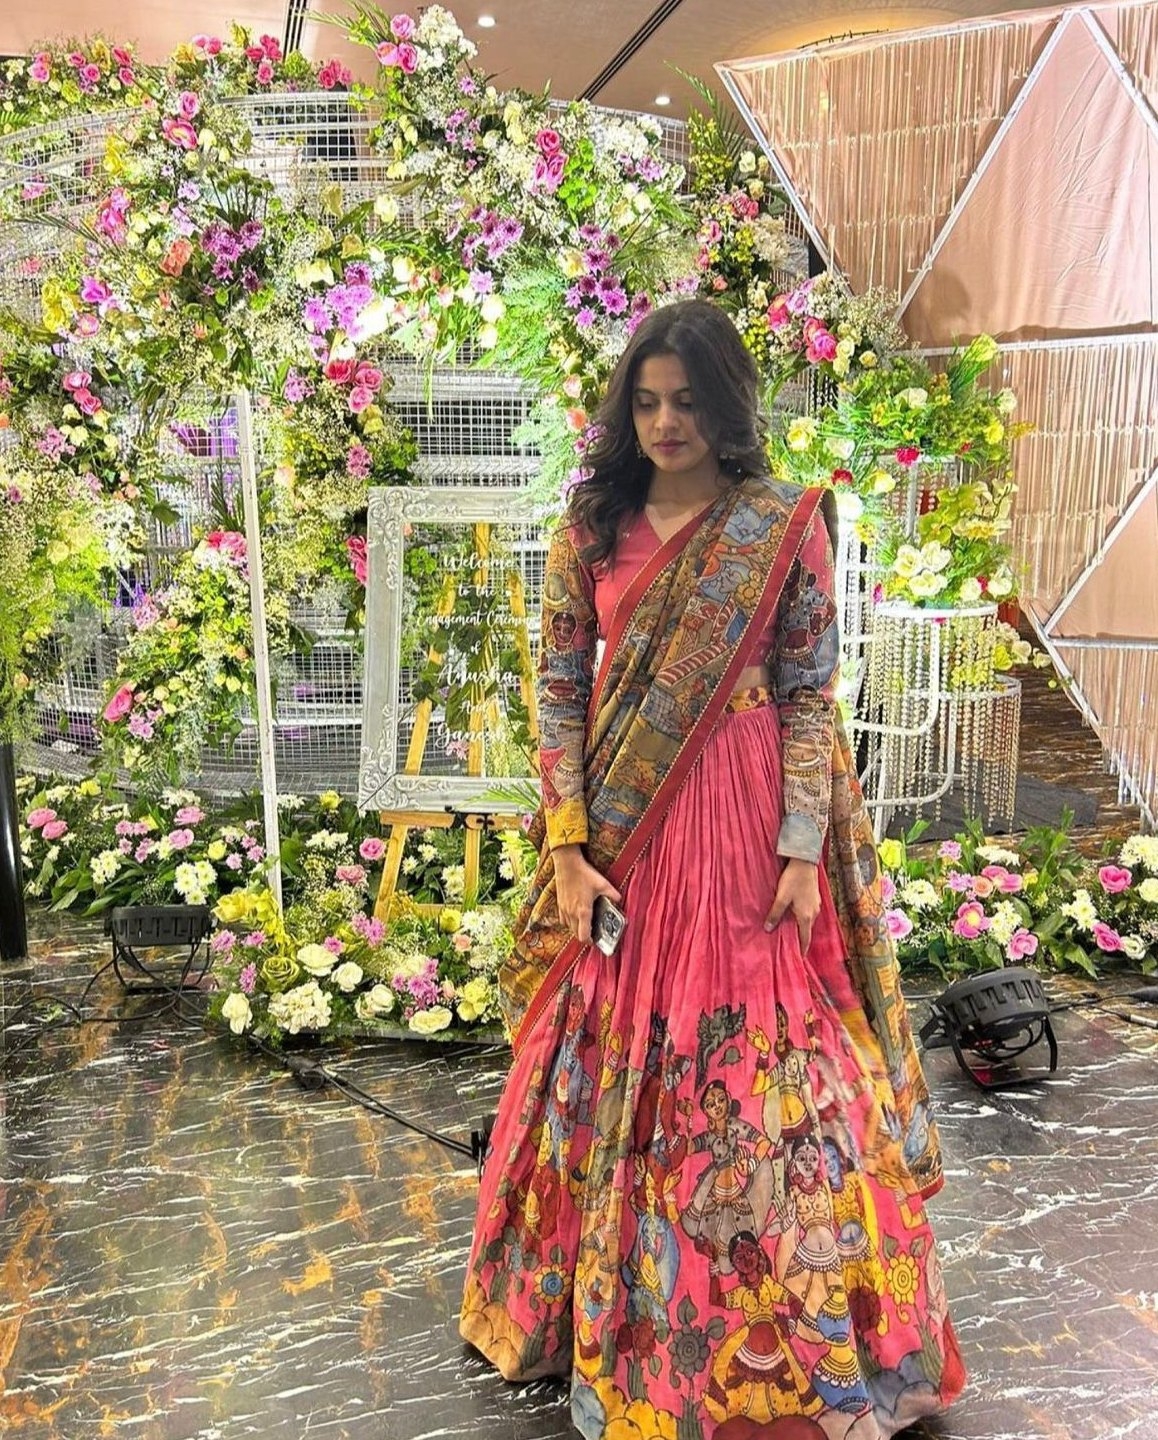 Denim lehenga for wedding anyone? Bride said yes, wore father's design -  India Today